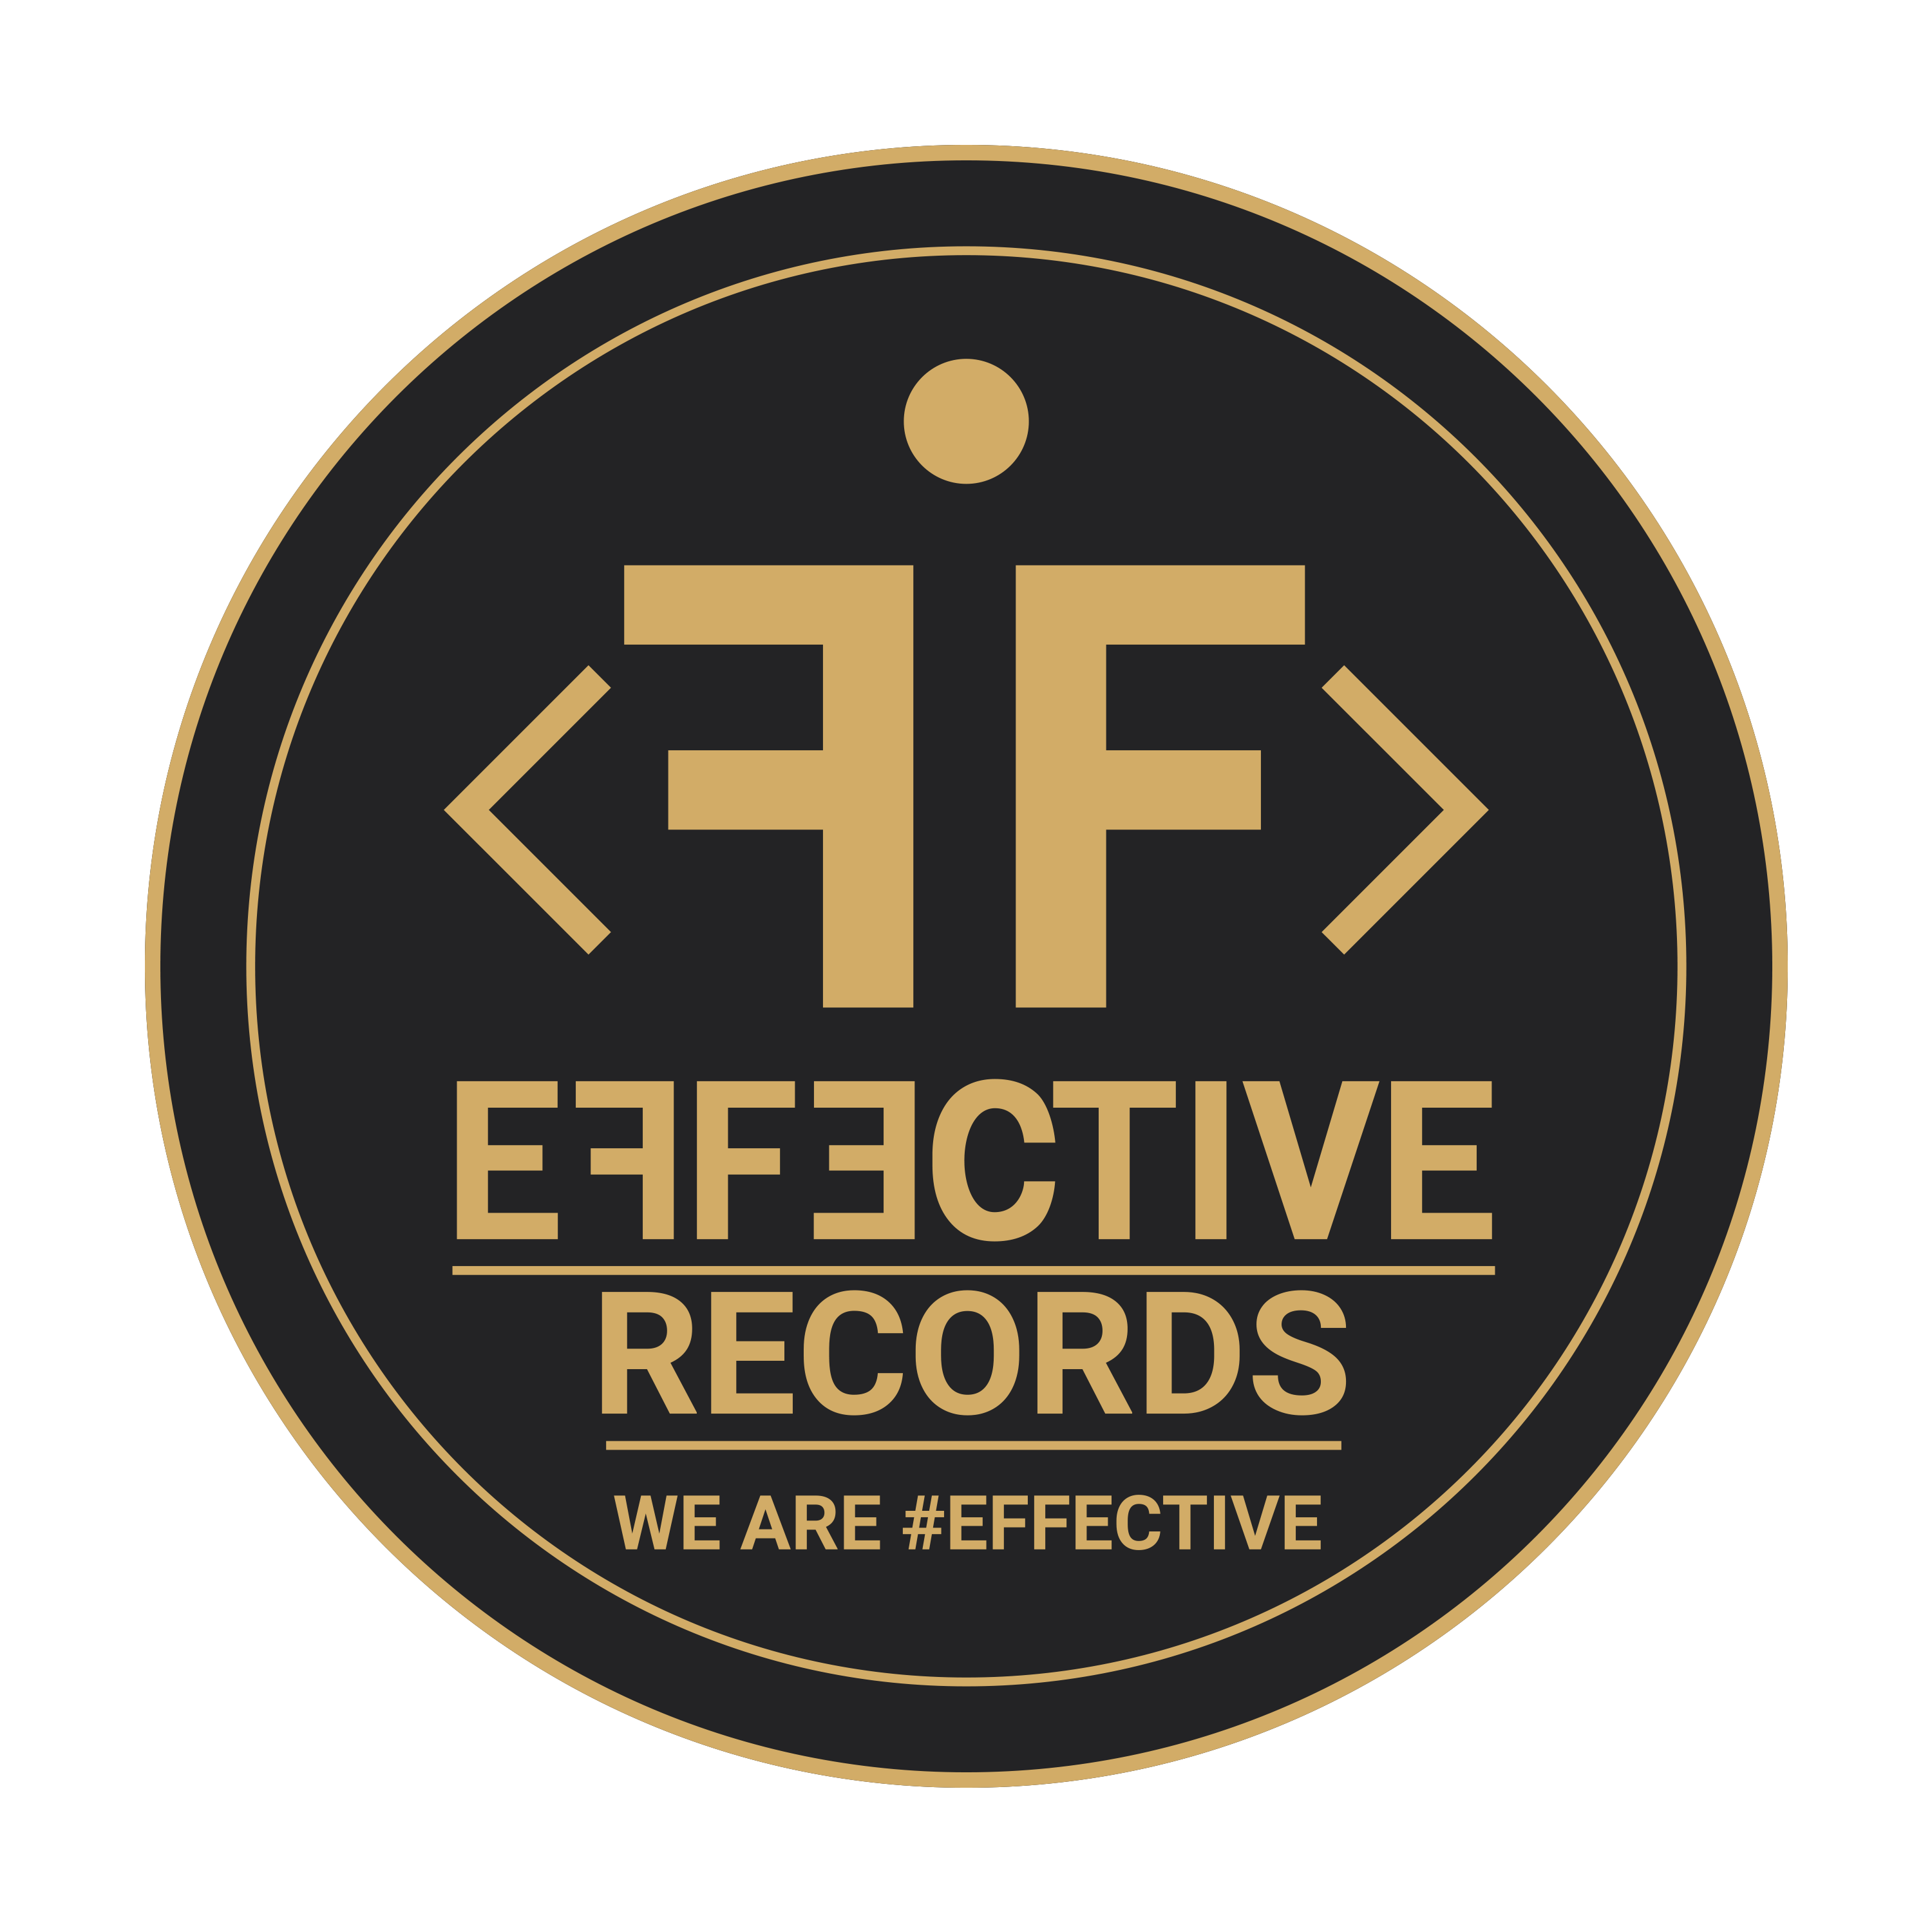 EFFECTIVE RECORDS